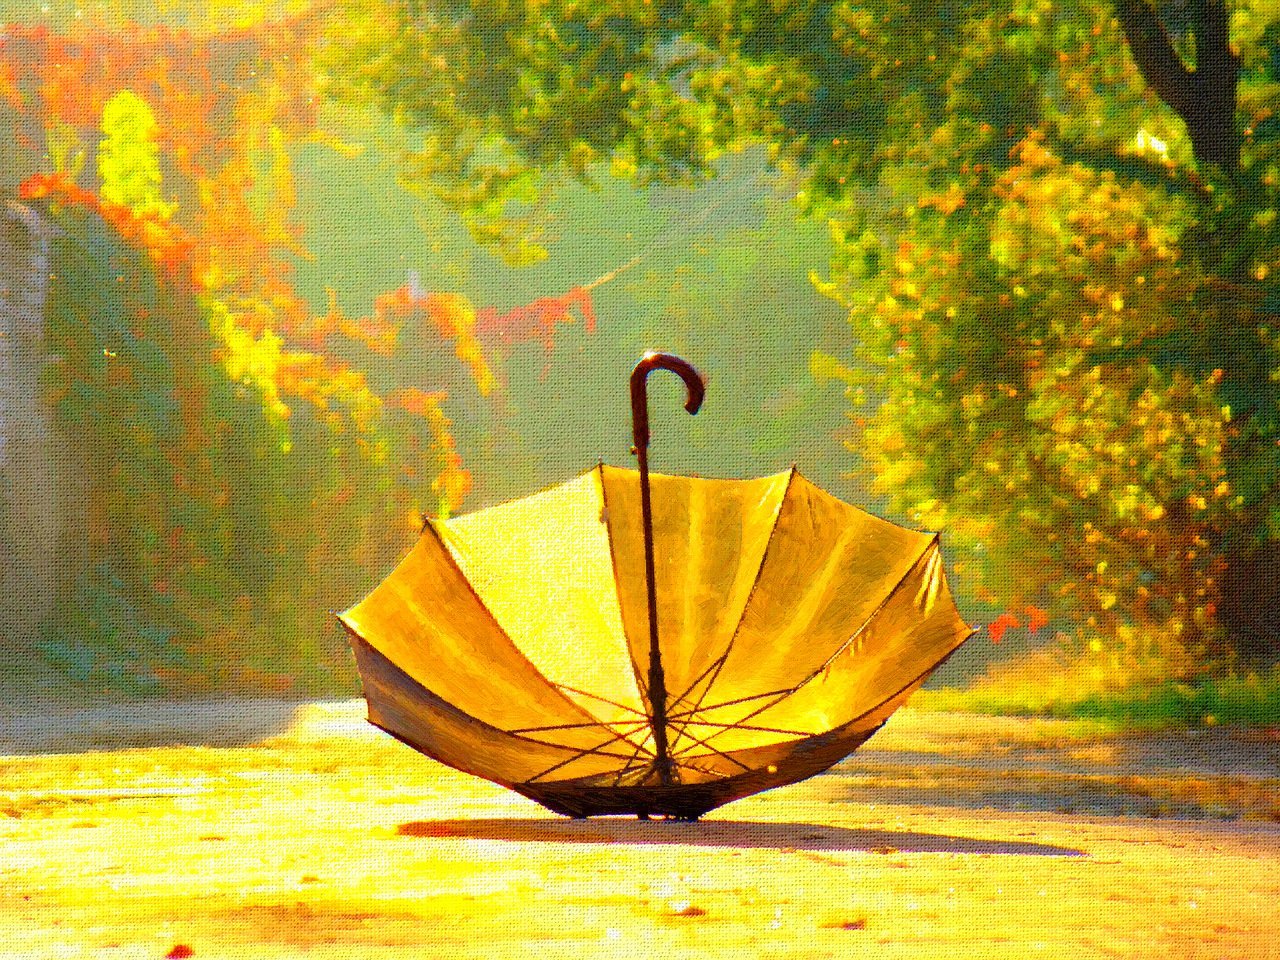 Осенний зонтик